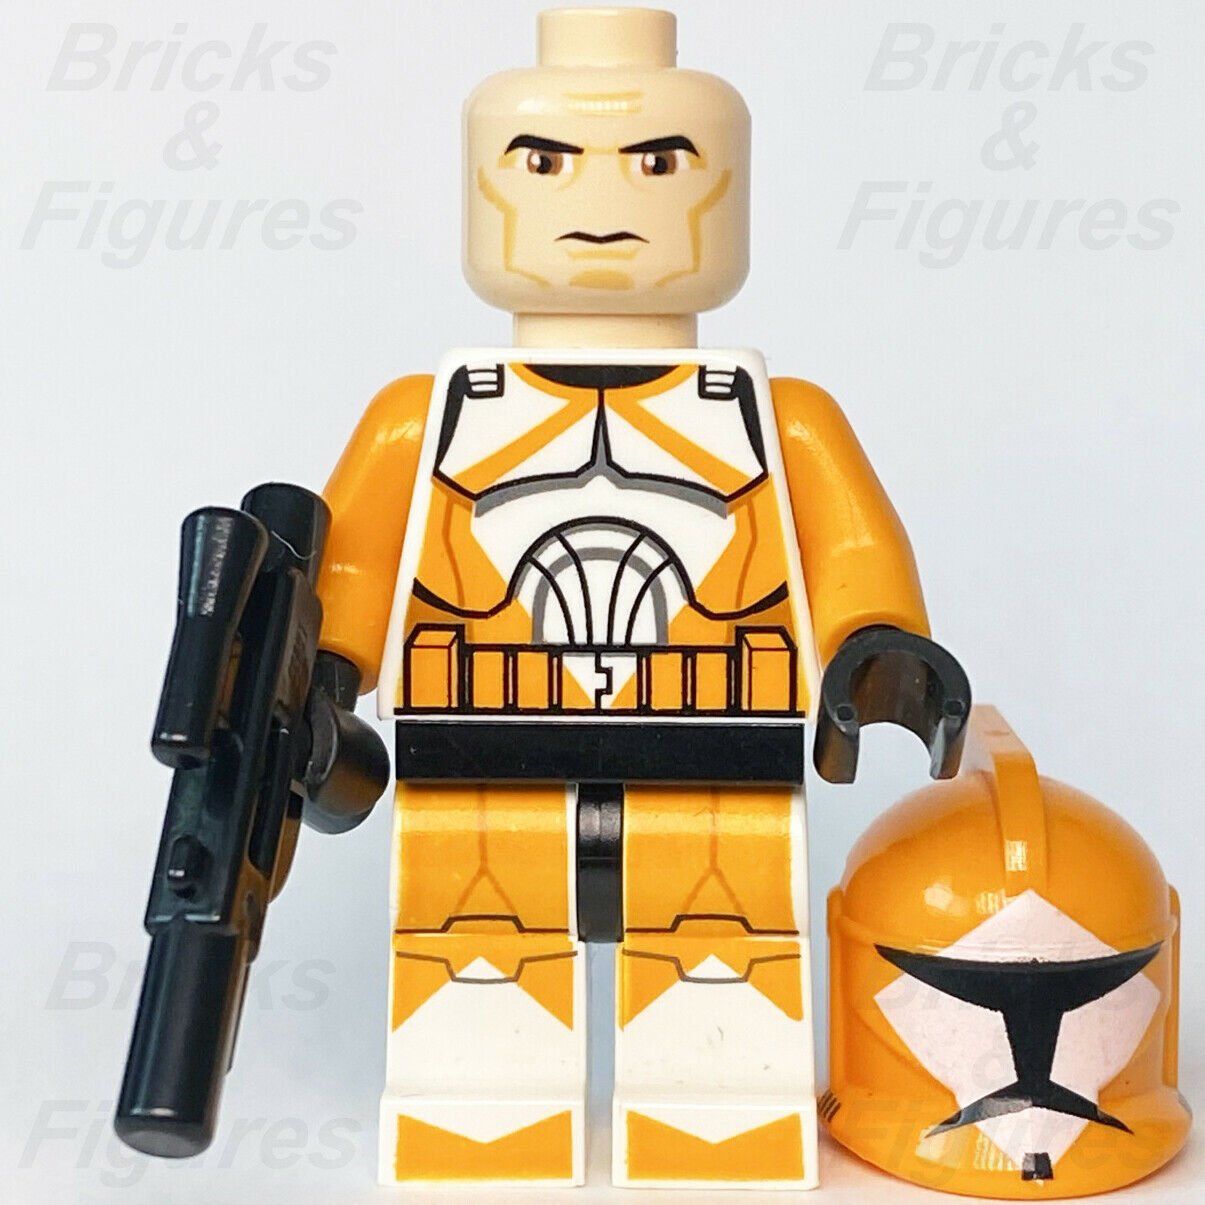 New Star Wars LEGO Phase 1 Bomb Squad Clone Trooper Minifigure 7913 - Bricks & Figures